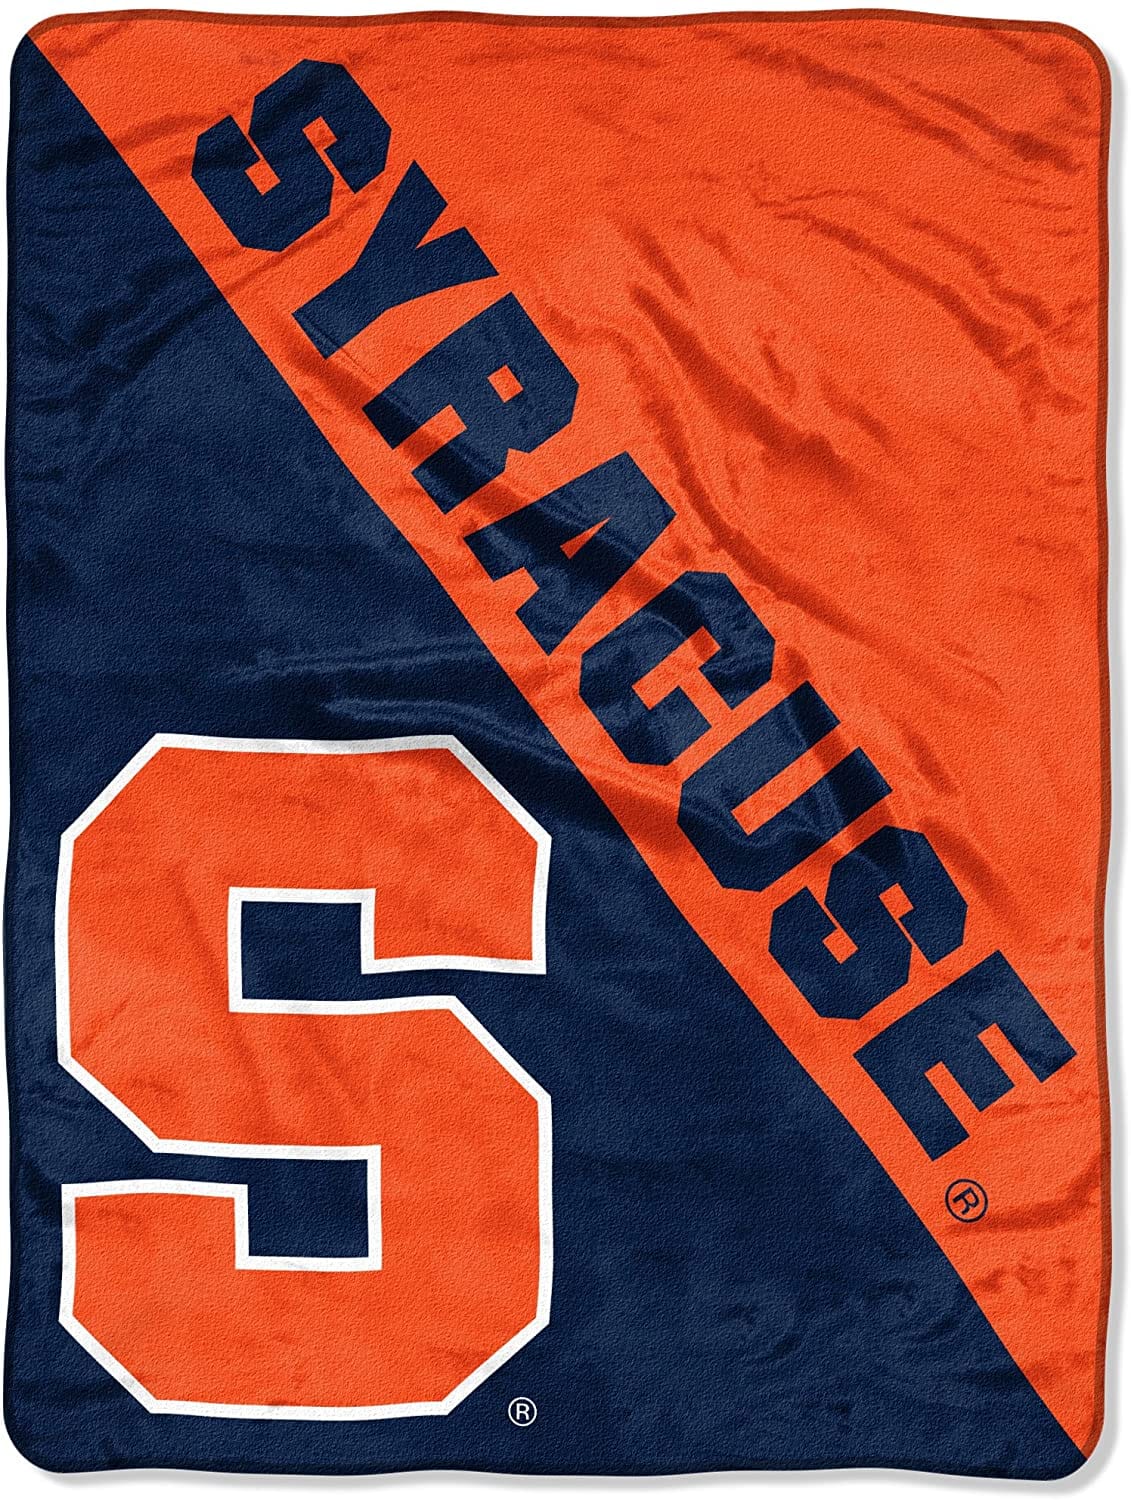 Ncaa Syracuse Orange Fleece Blanket